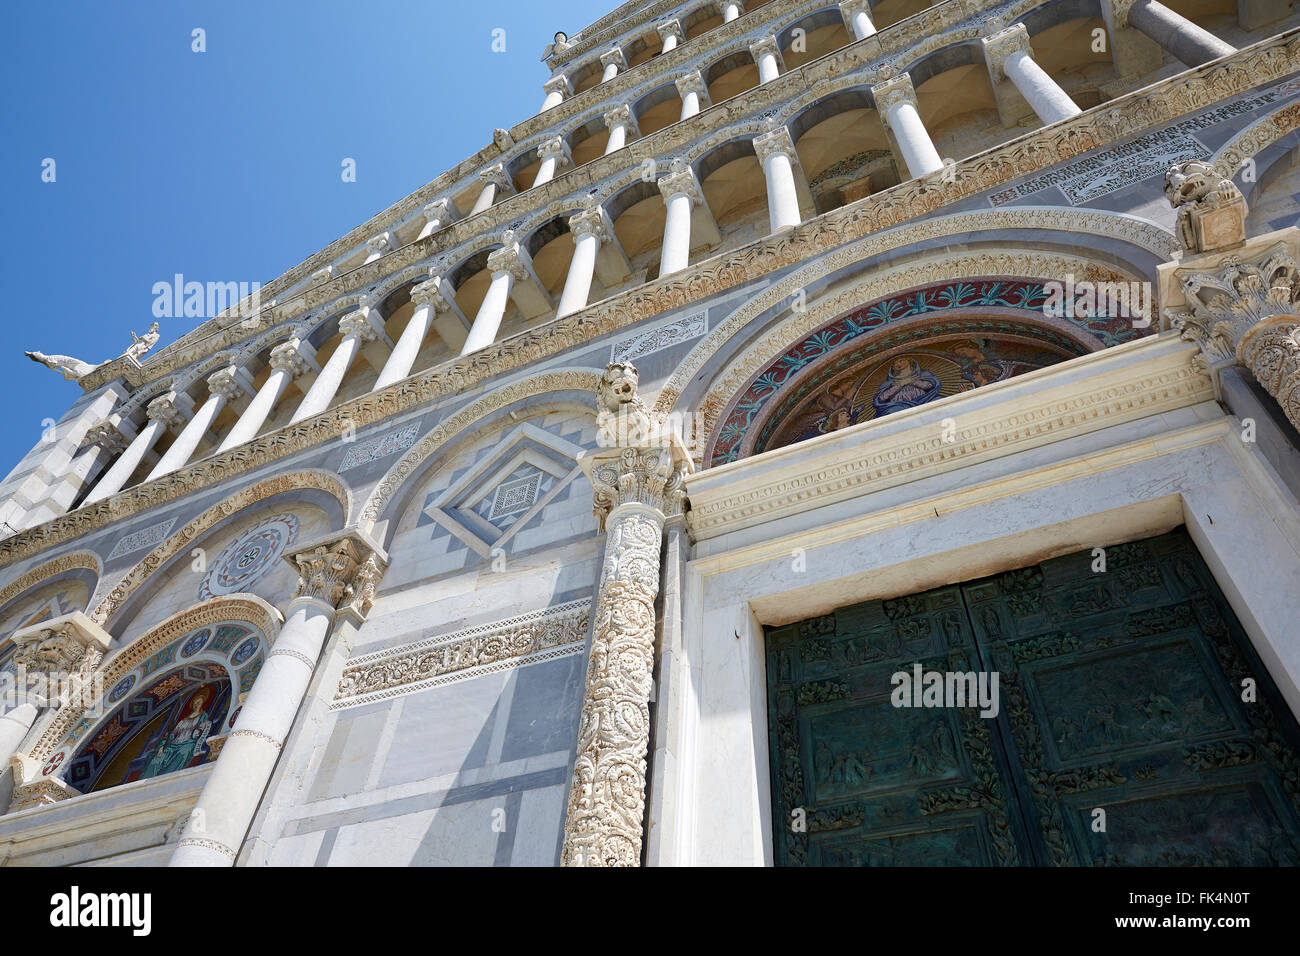 ITALIEN PISA ARCHITEKTUR ARCHITEKTURDETAIL Stockfoto